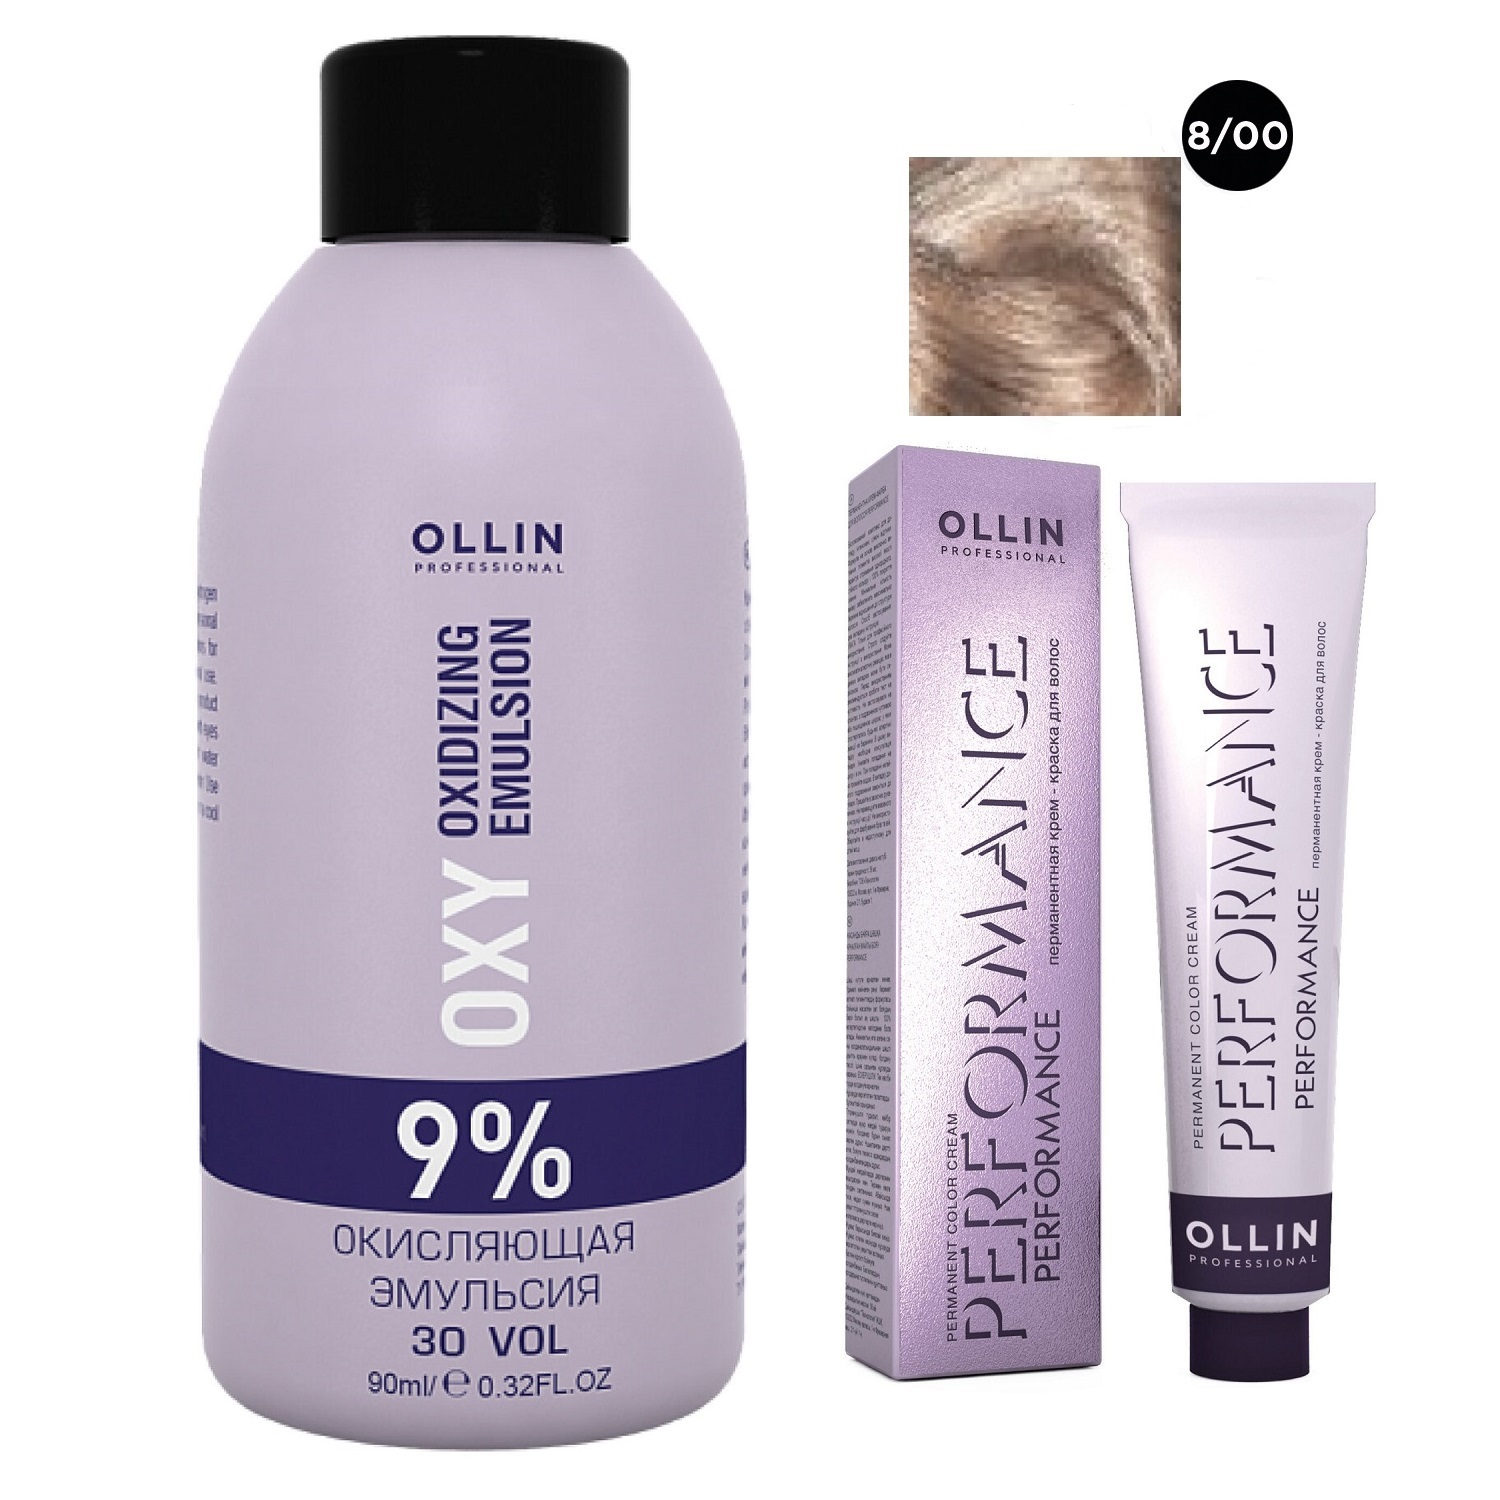 Ollin Professional Набор Перманентная крем-краска для волос Ollin Performance оттенок 8/00 светло-русый глубокий 60 мл + Окисляющая эмульсия Oxy 9% 90 мл (Ollin Professional, Performance) окисляющая эмульсия ollin professional performance oxy 9% 30vol 90 мл